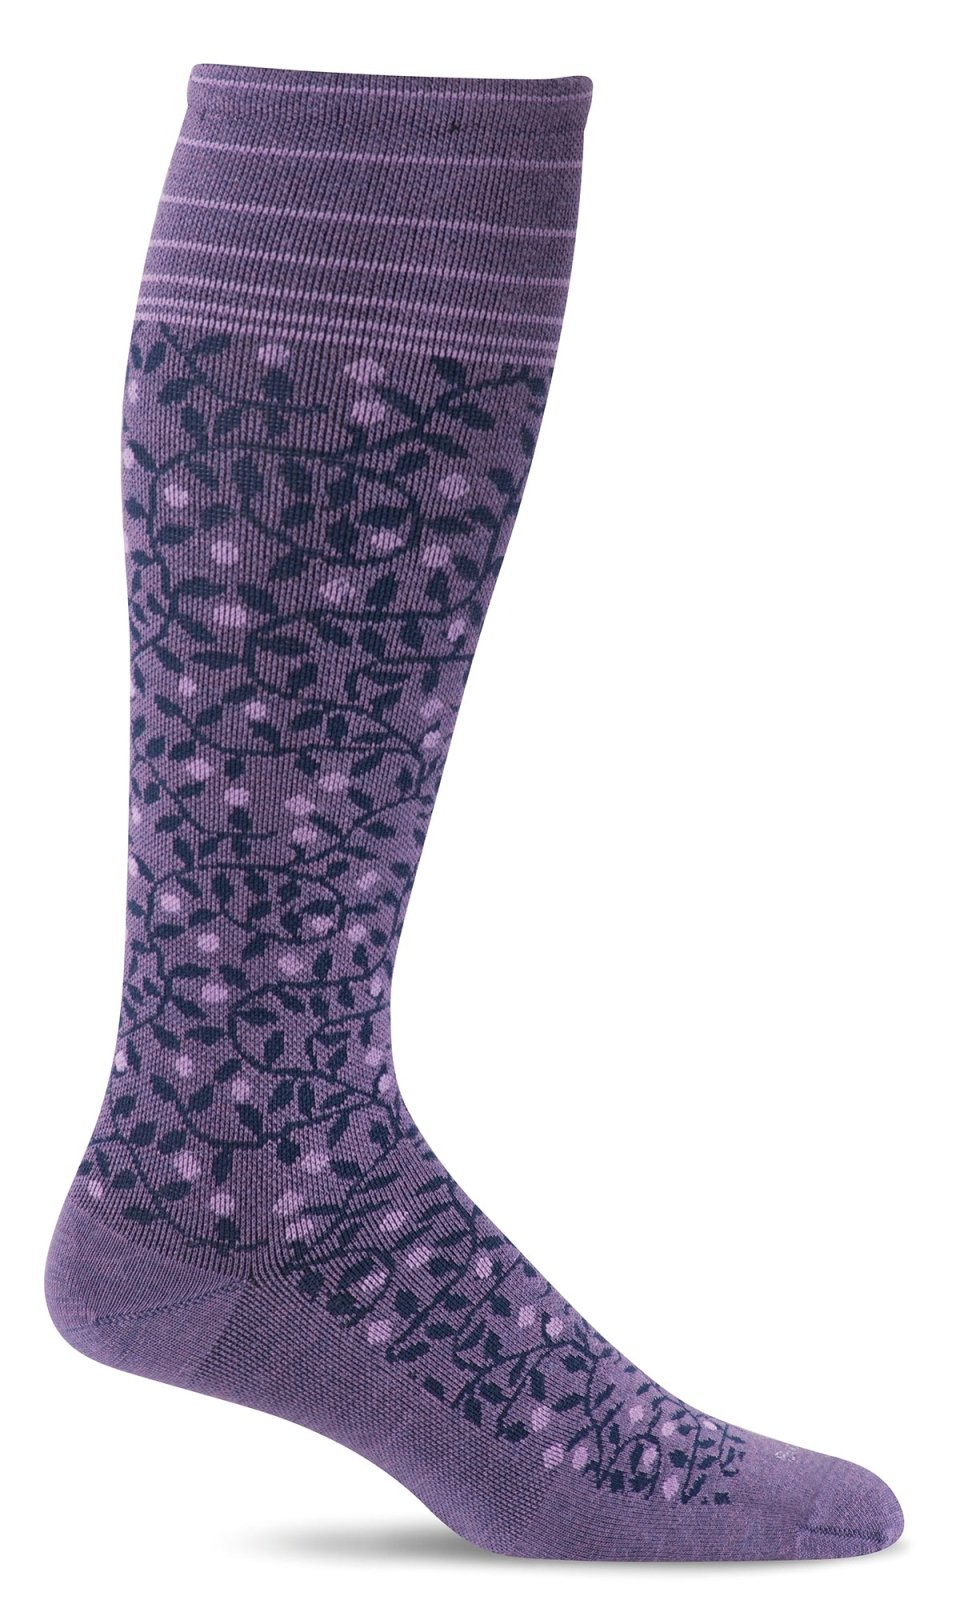 Women's New Leaf | Firm Graduated Compression Socks - Merino Wool Lifestyle Compression - Sockwell